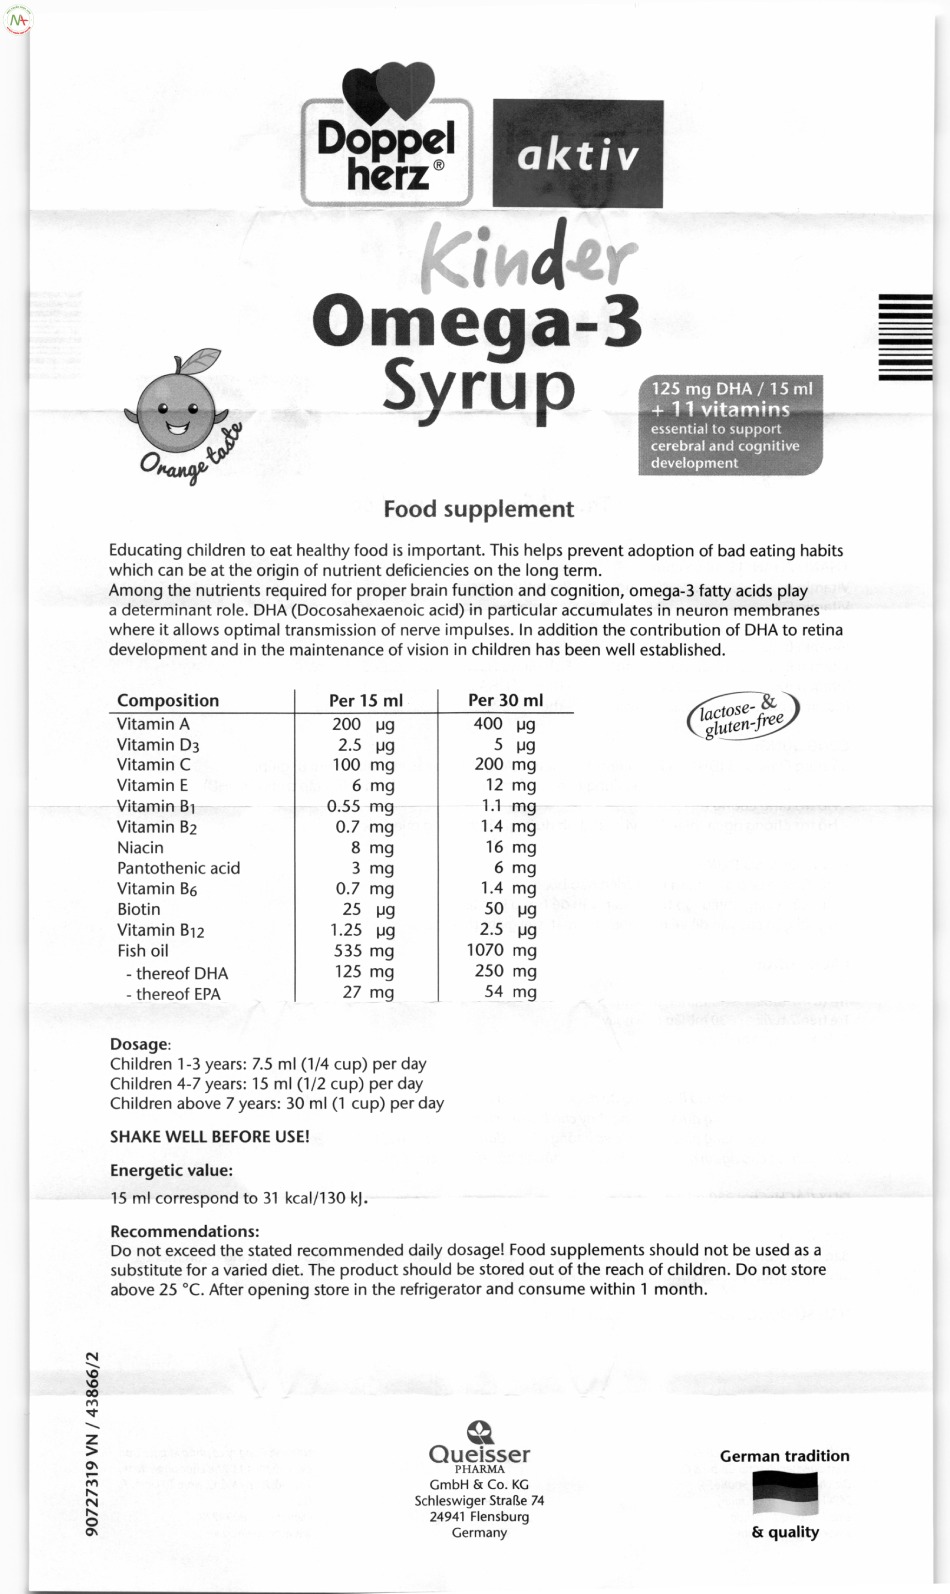 Tờ hướng dẫn sử dụng Doppelherz Kinder Omega-3 Syrup